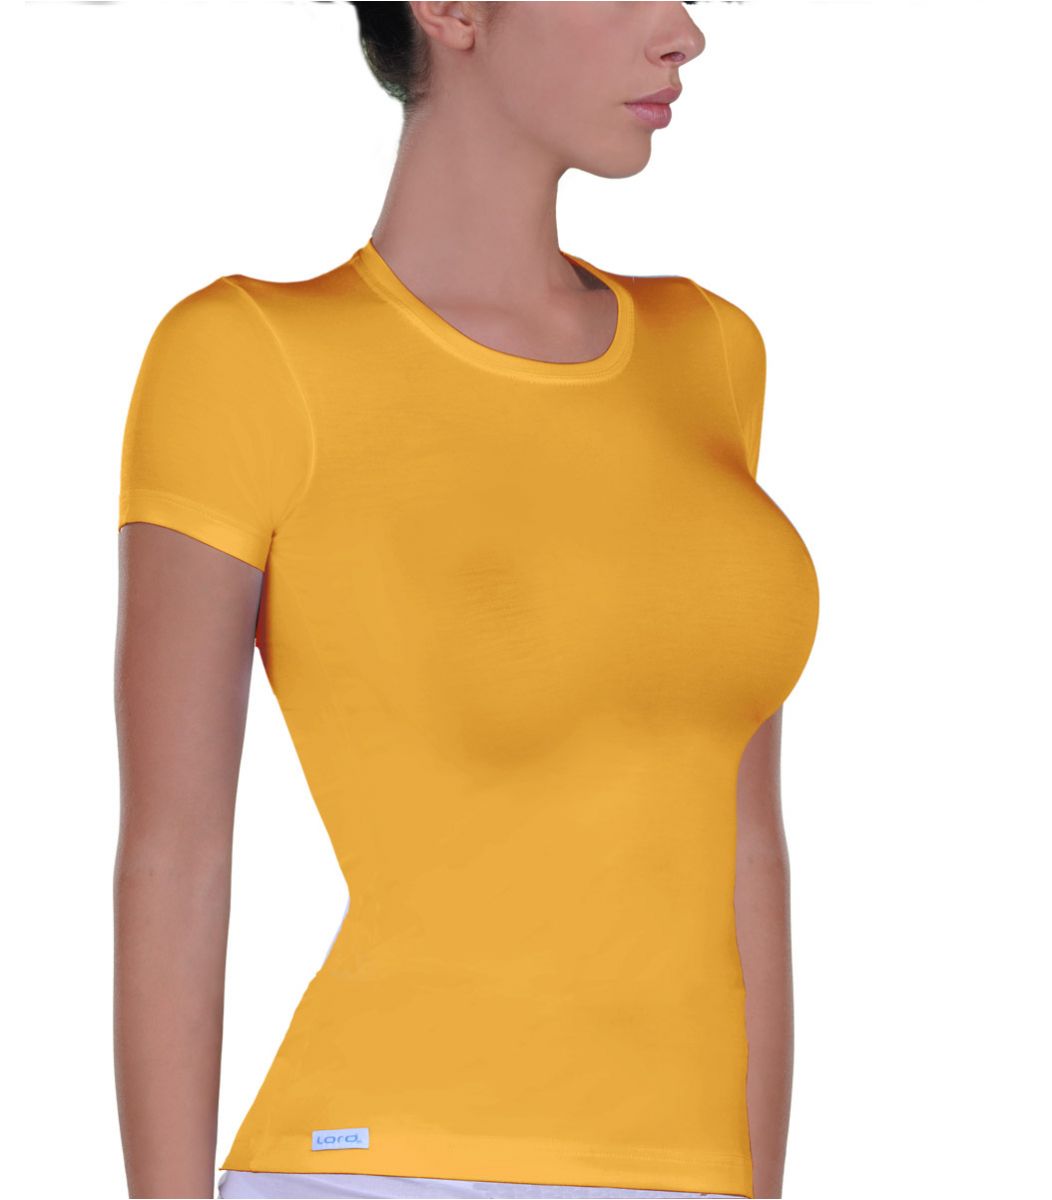 Women elastic T-Shirt, yellow